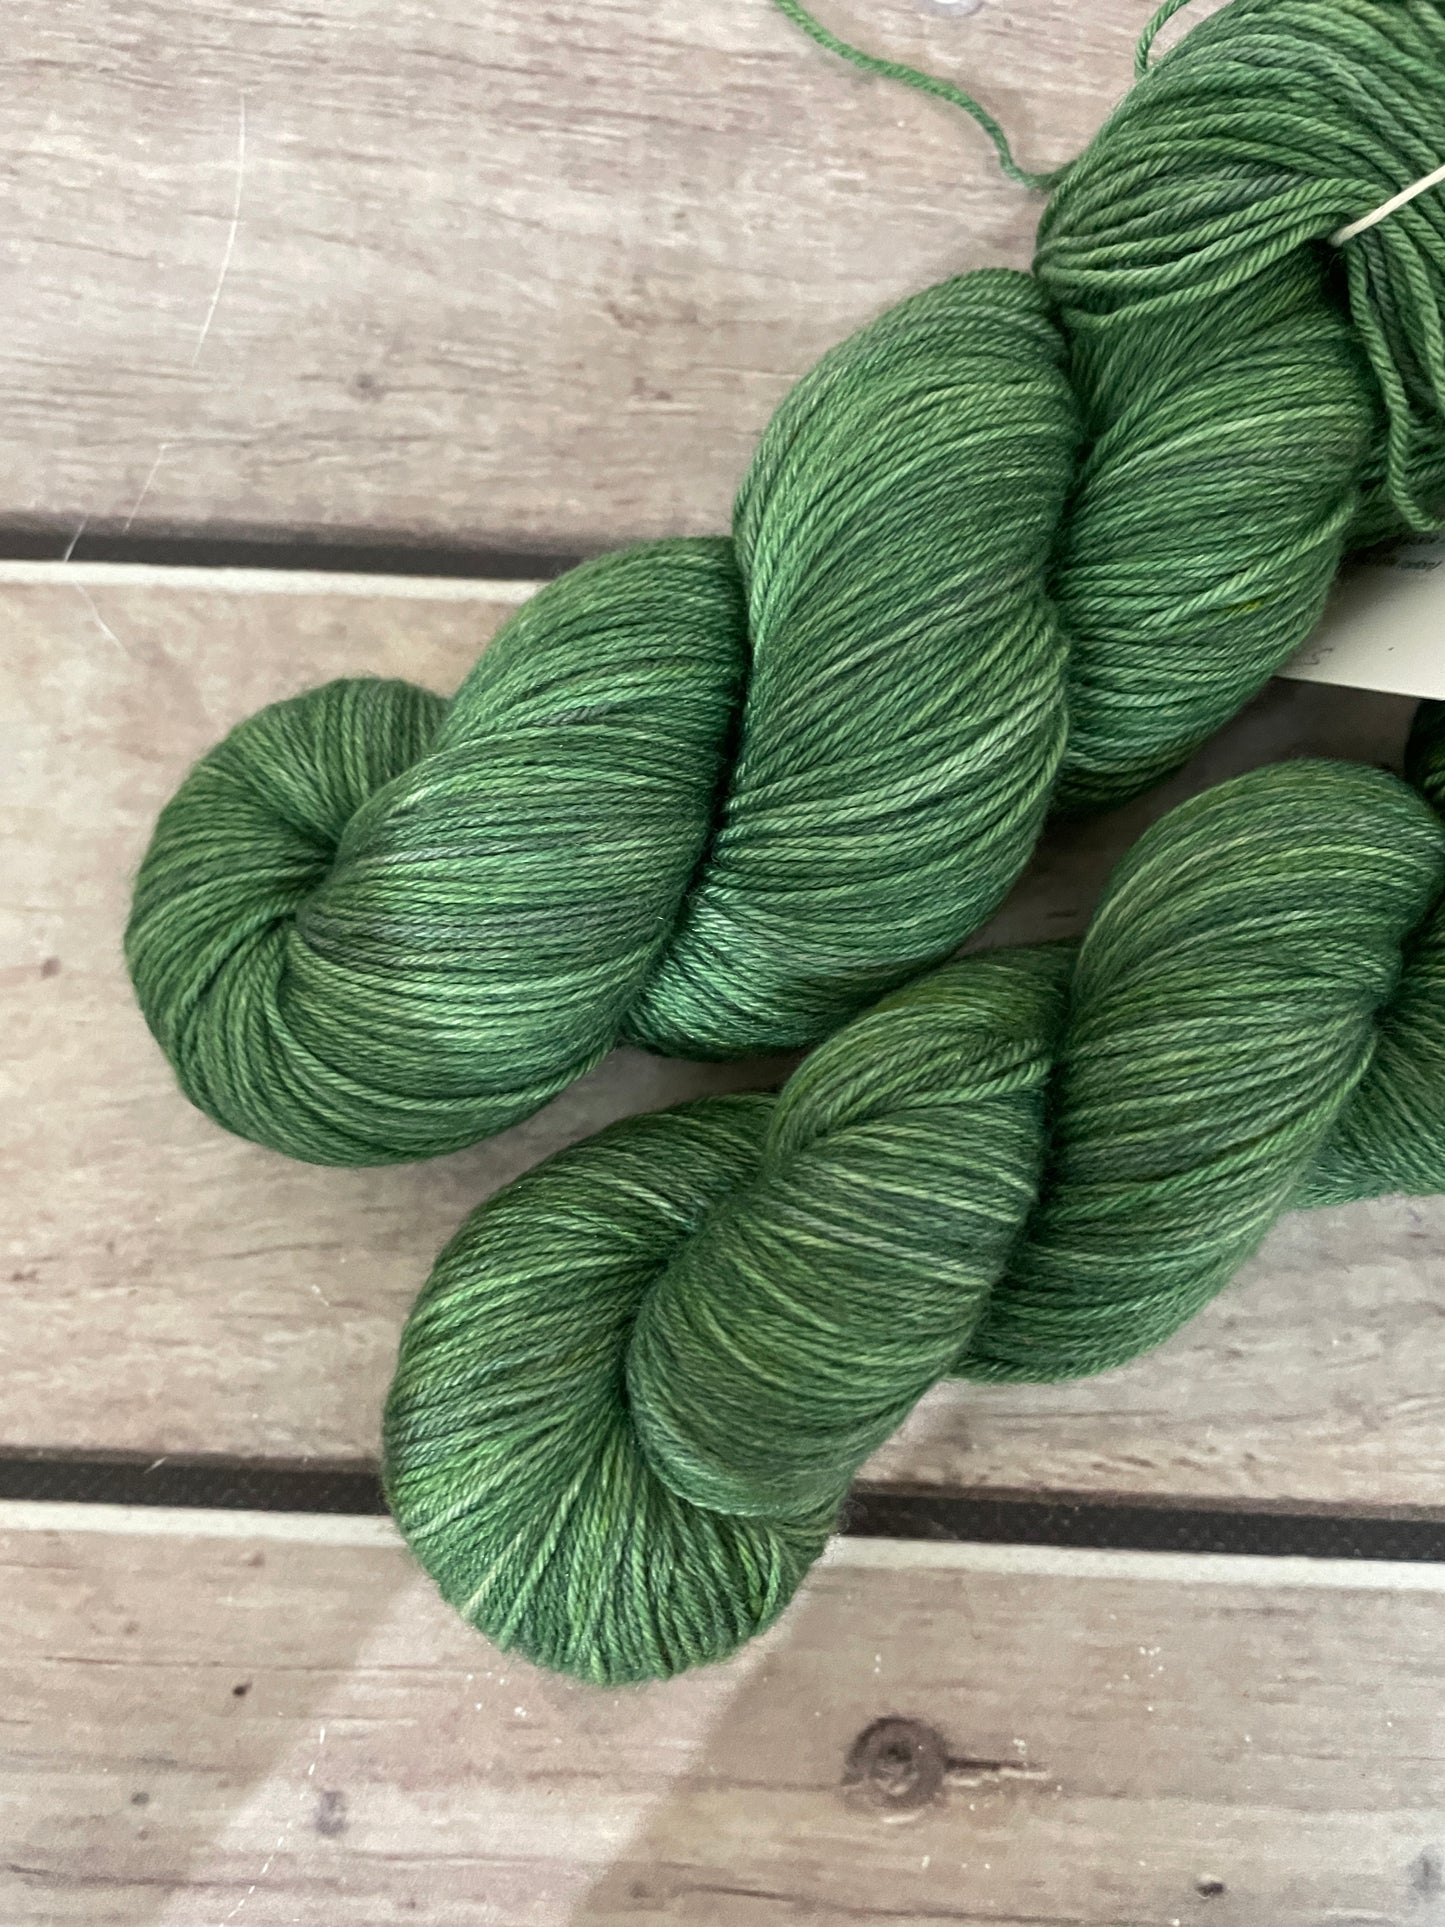 The Pines - sock yarn in merino and nylon yarn - Darjeeling